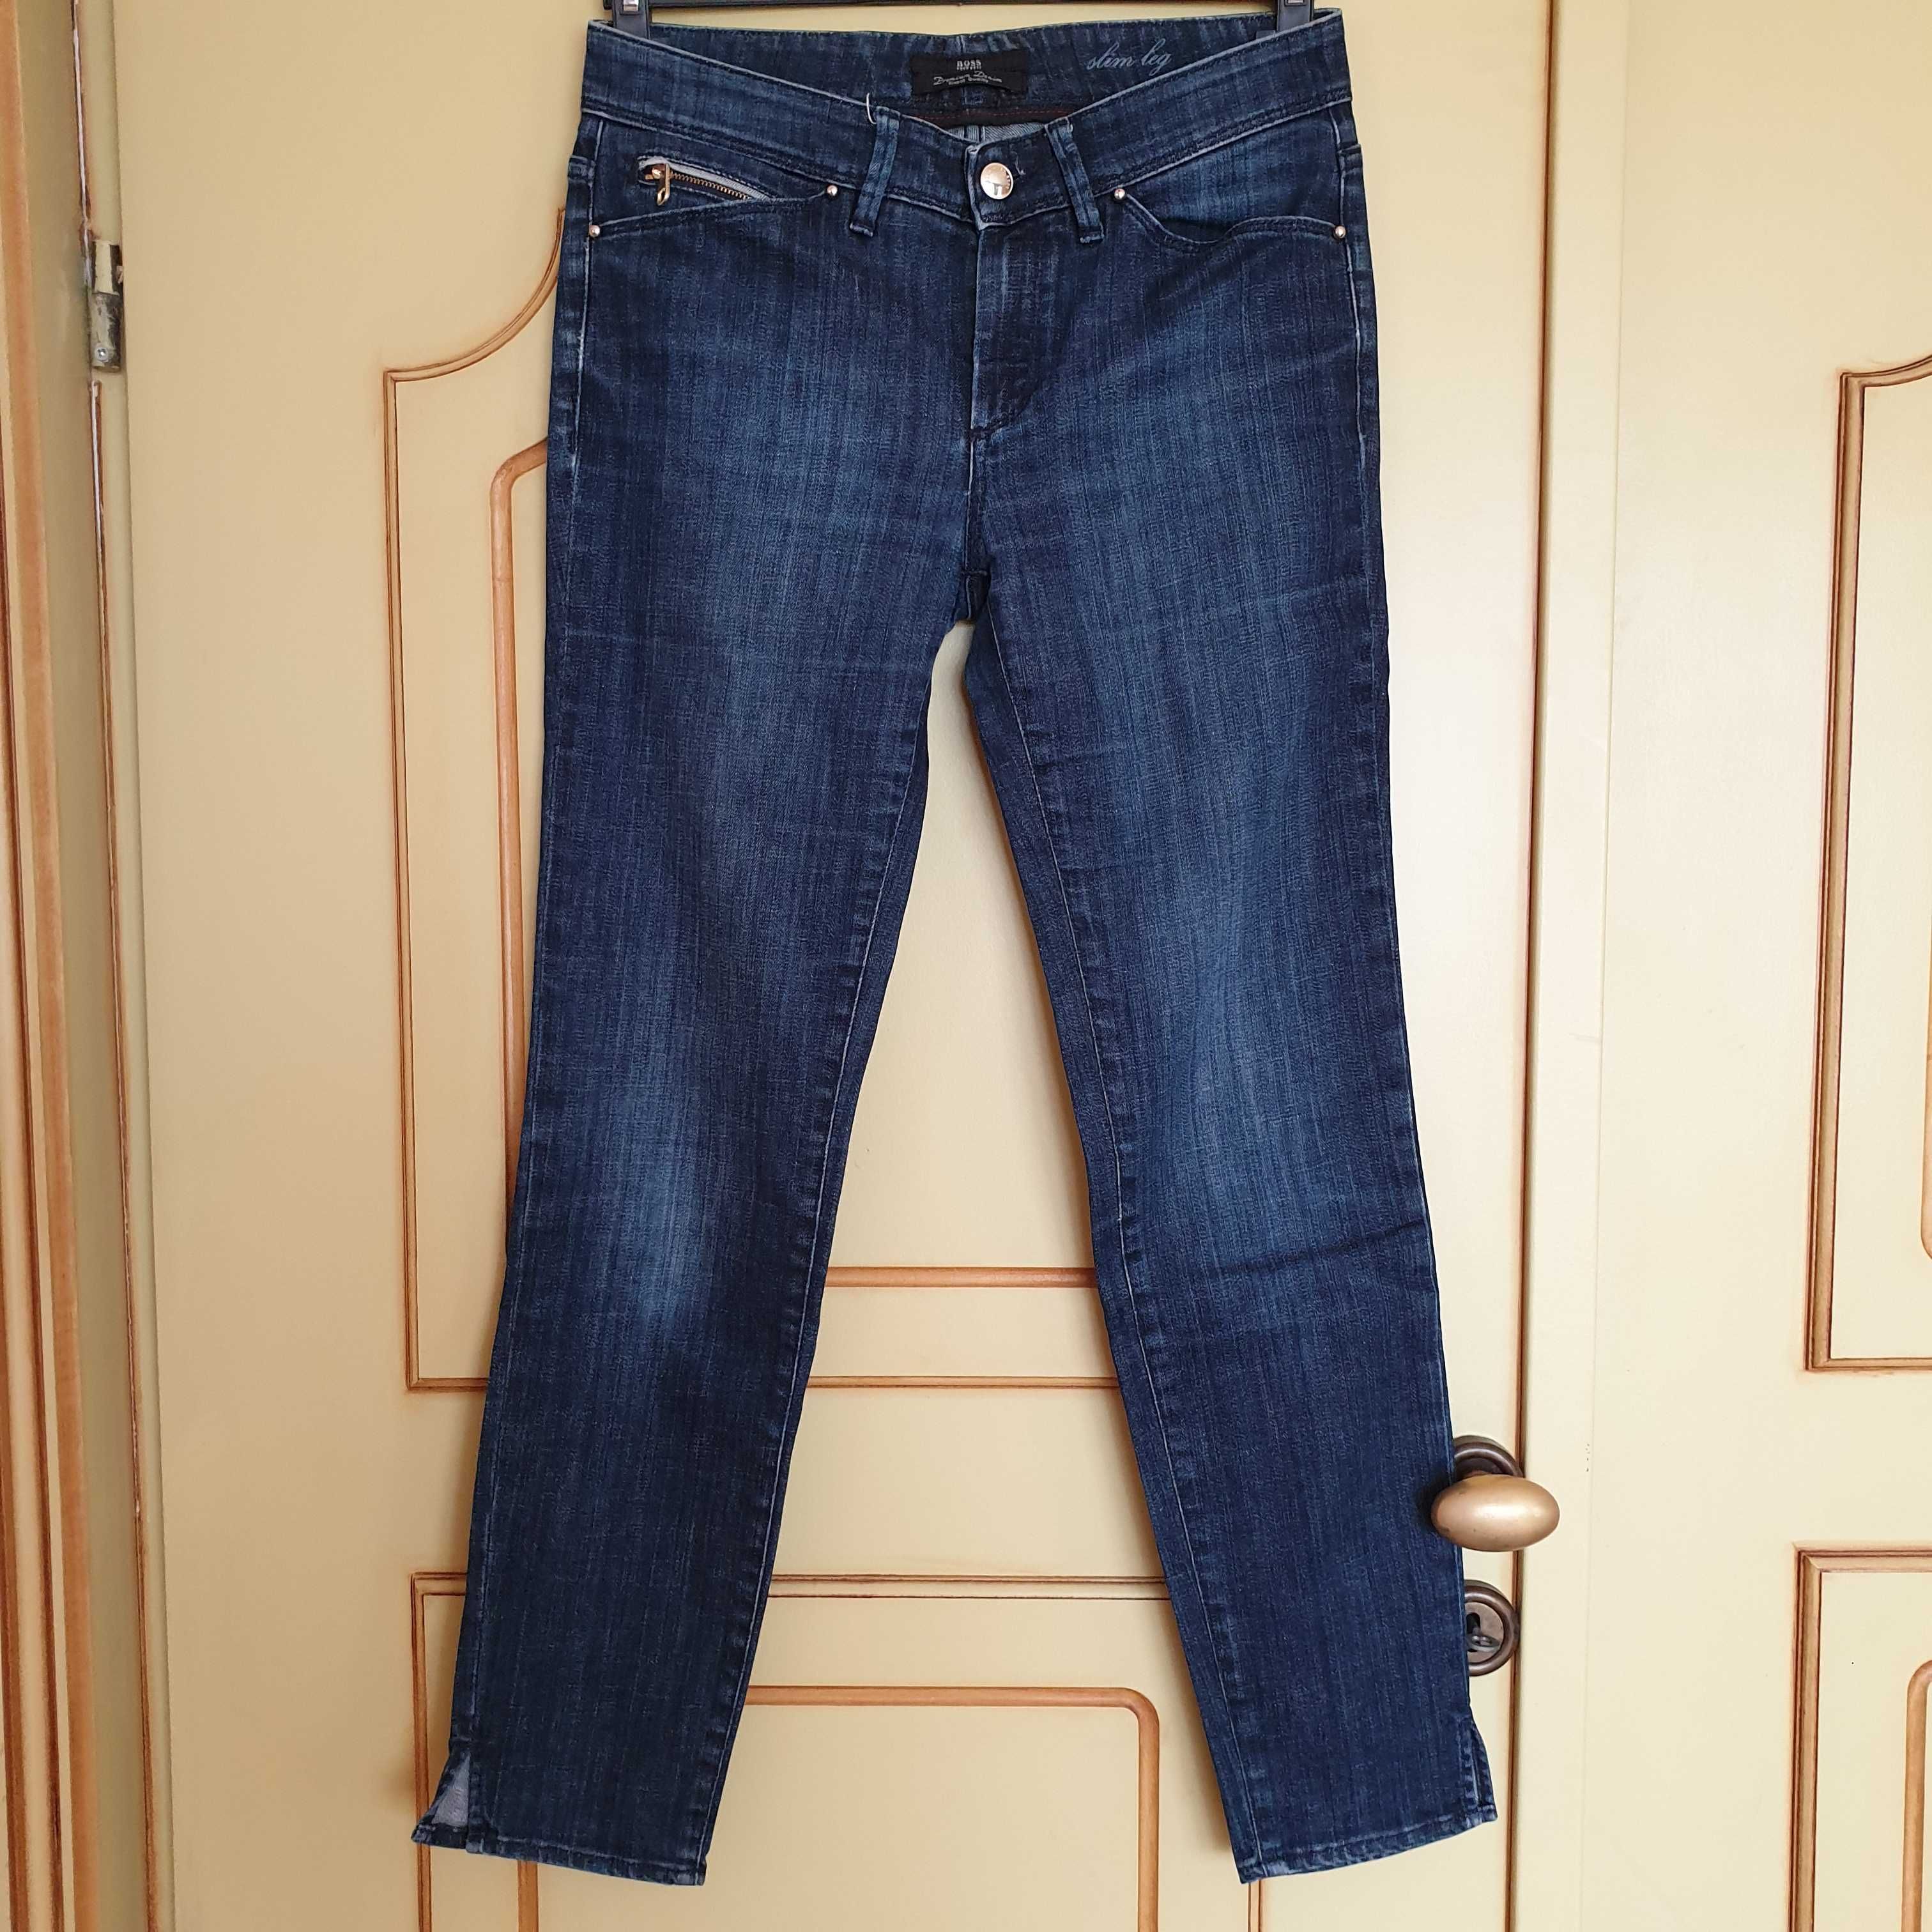 Hugo Boss jeansy oryginalne, rurki rozmiar 26